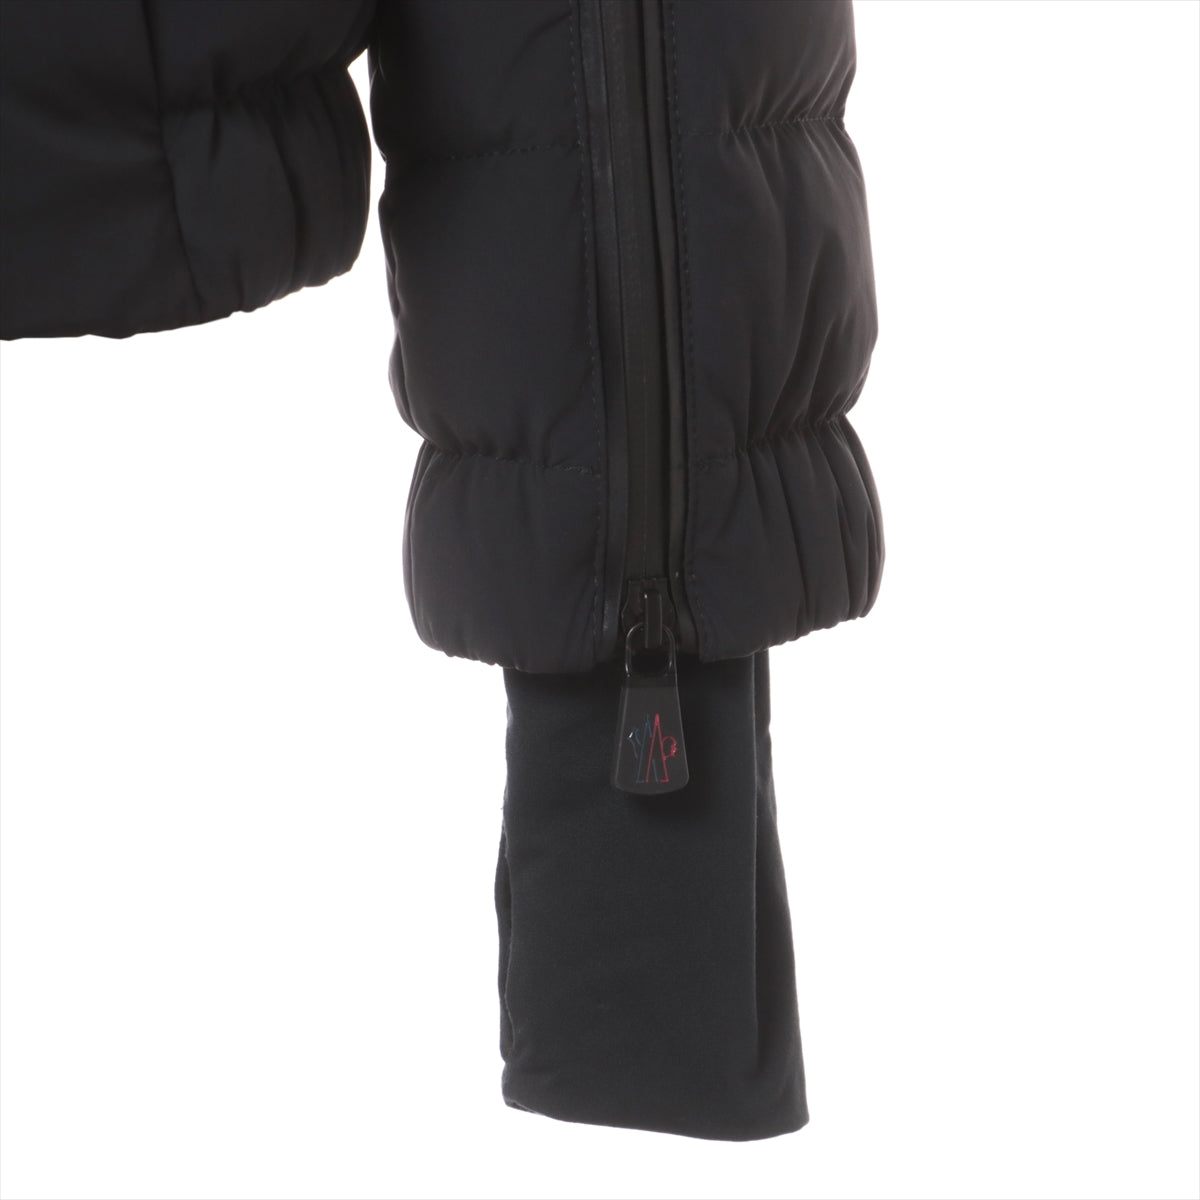 Moncler Grenoble CHENA 19-year Polyester x nylon x polyurethane Down jacket 1 Ladies' Black